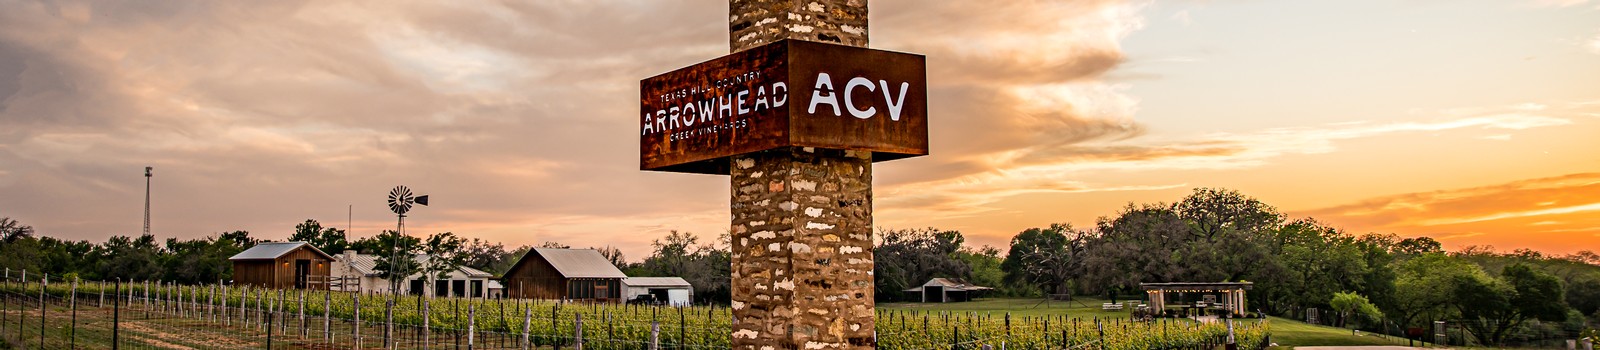 Arrowhead Creek Vineyards Entrance Sign